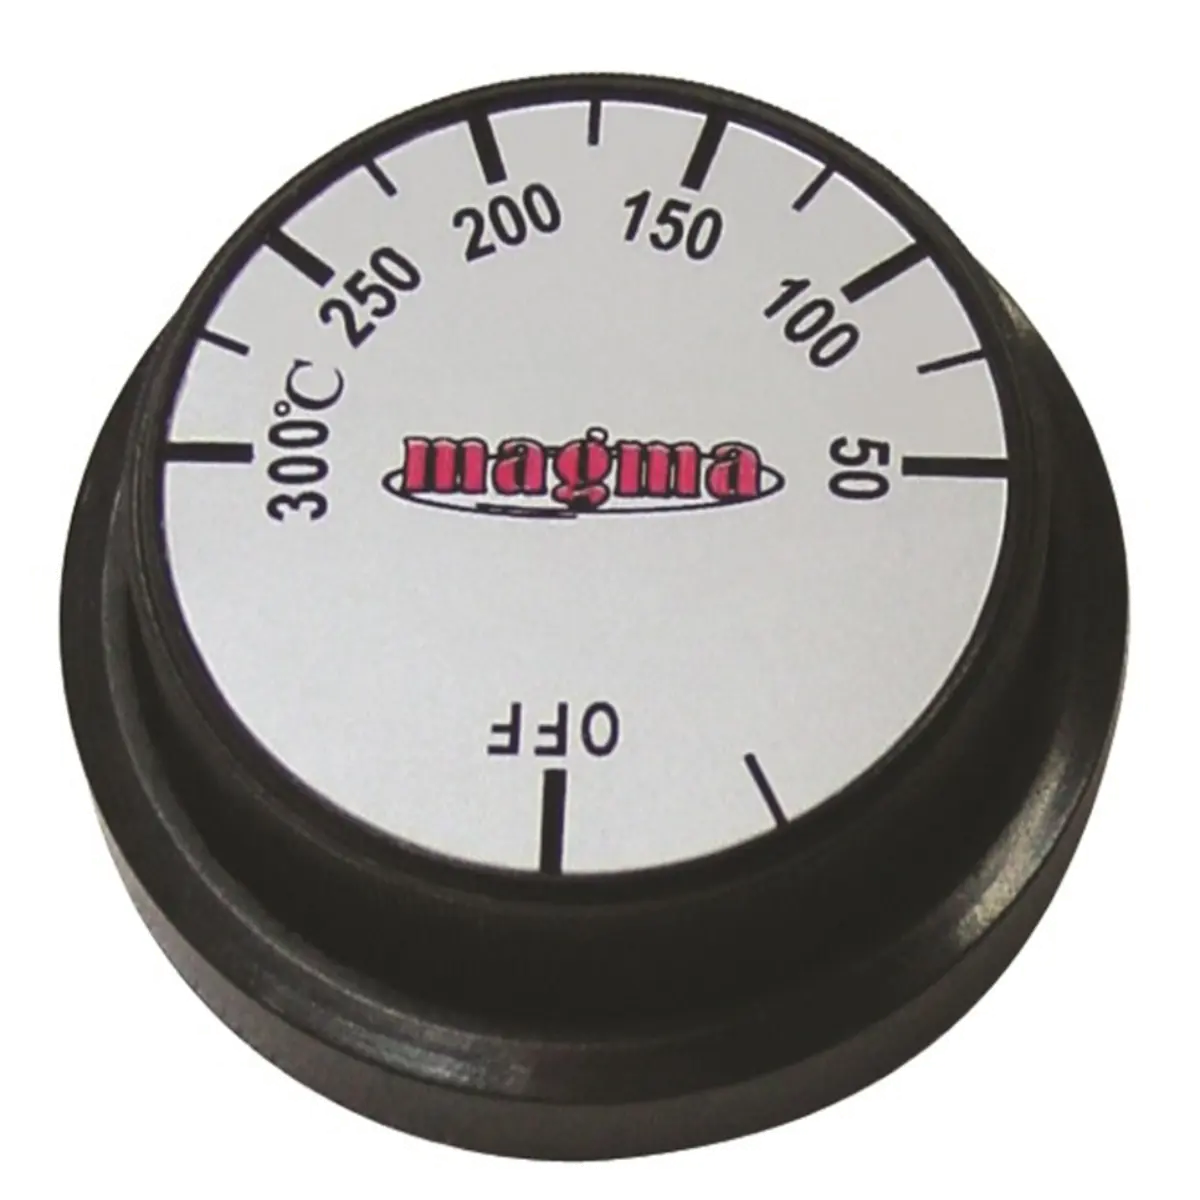 Temperature Selector Dial  Large Lay Marker Iron - Magma